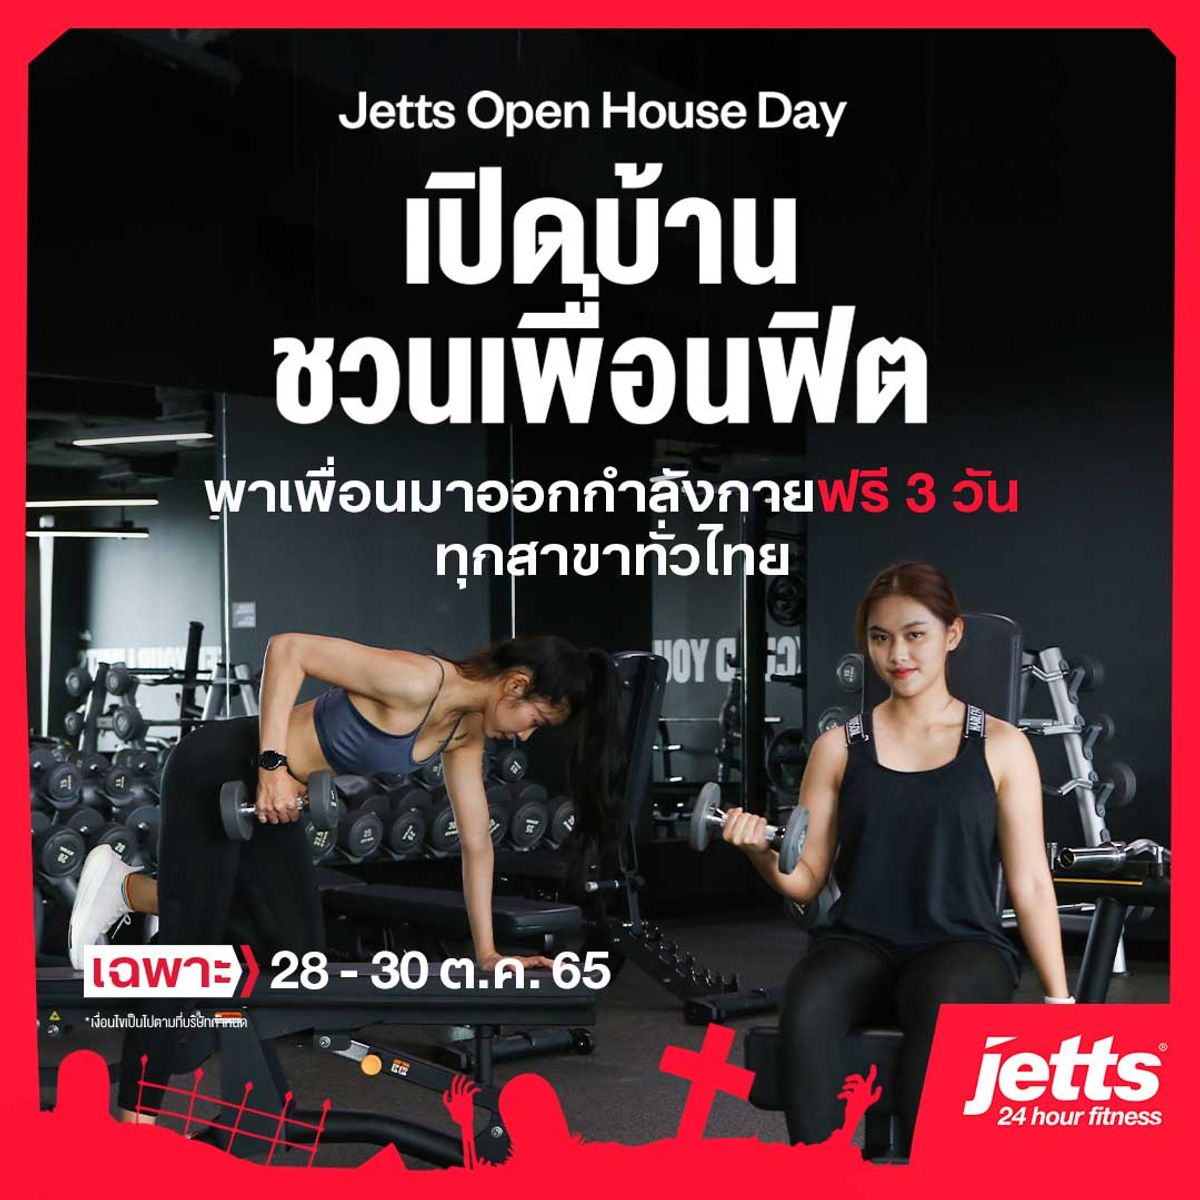 Jetts Fitness สมาชิกเจ็ทส์พาเพื่อนมาทดลองเล่นฟรี ทุกสาขาทั่วไทย ฟรี 3 วัน  กรกฎาคม 2023 - Sale Here